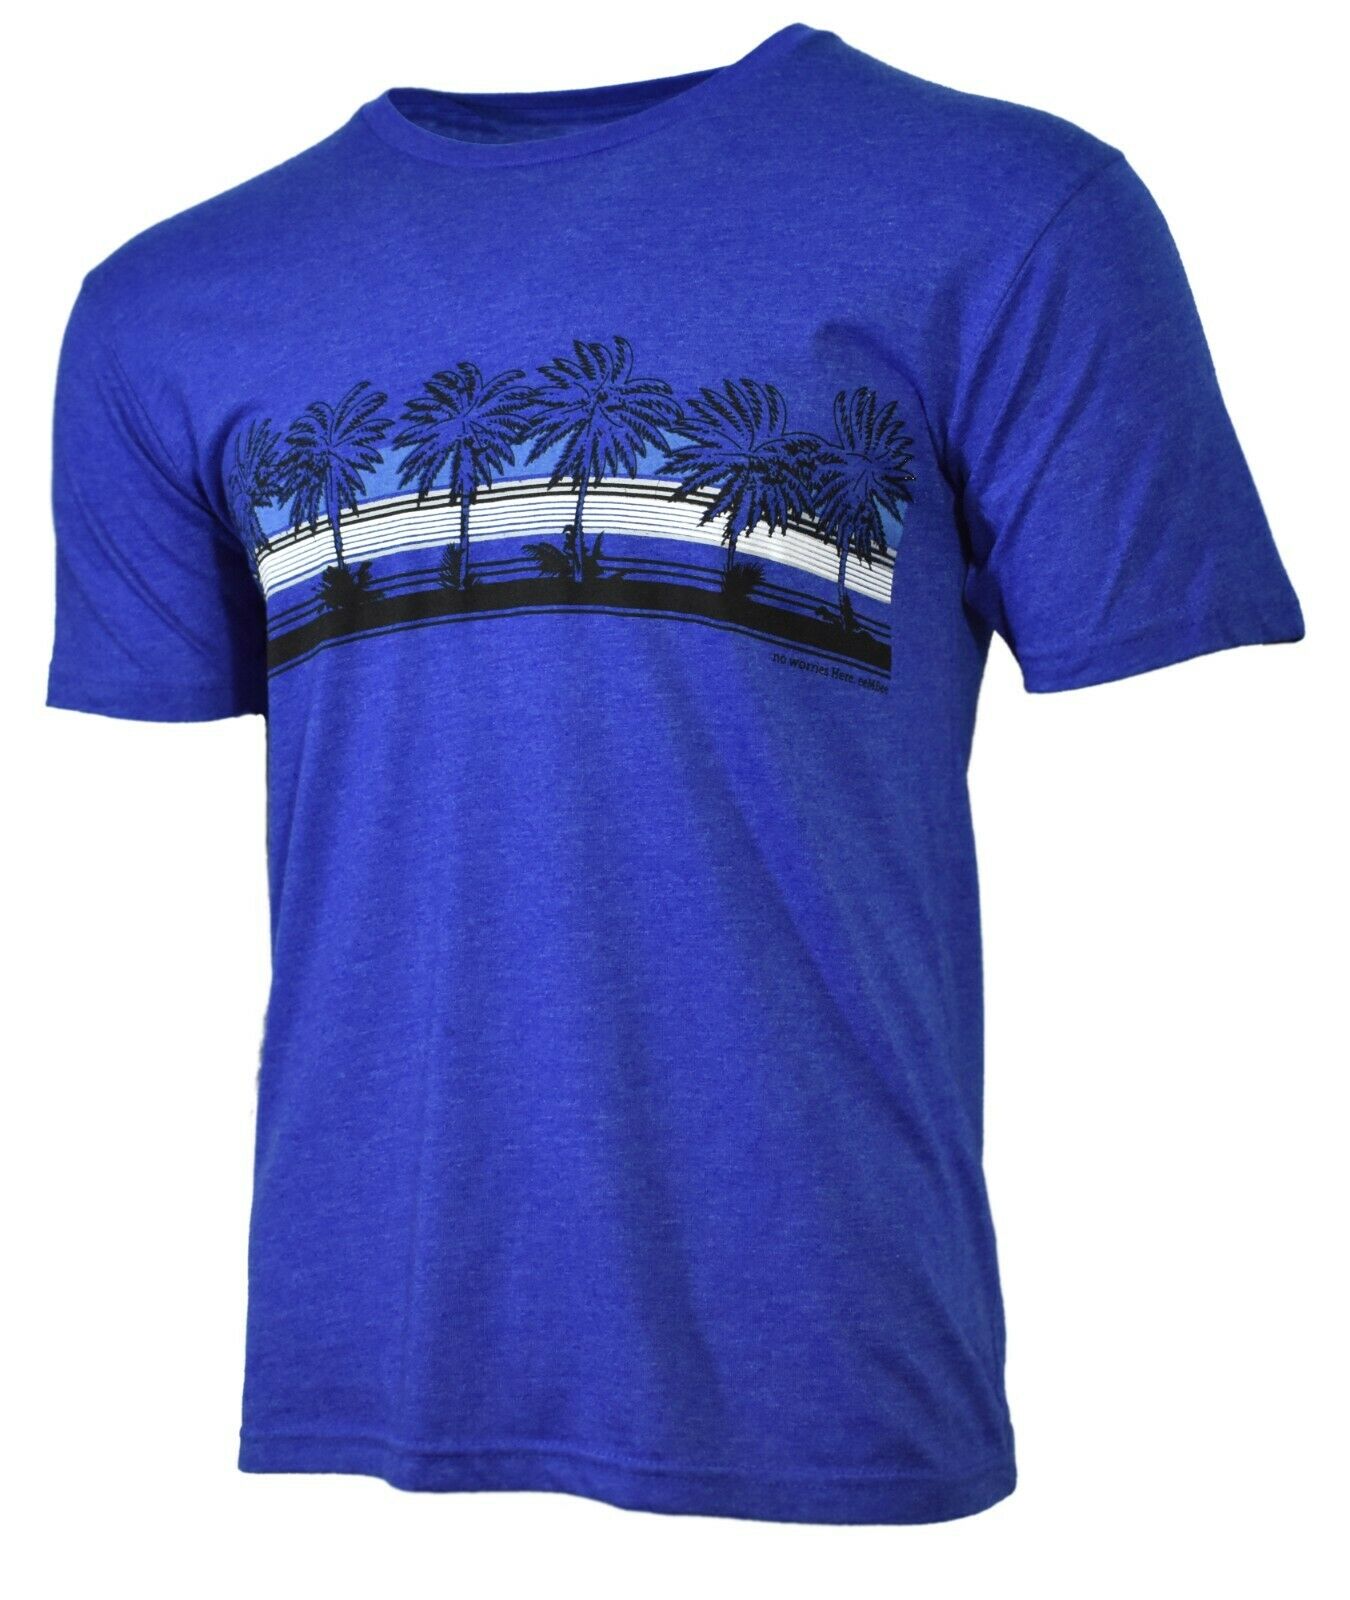 Men's T-Shirt Sunset Bahama Palm Trees No worries here